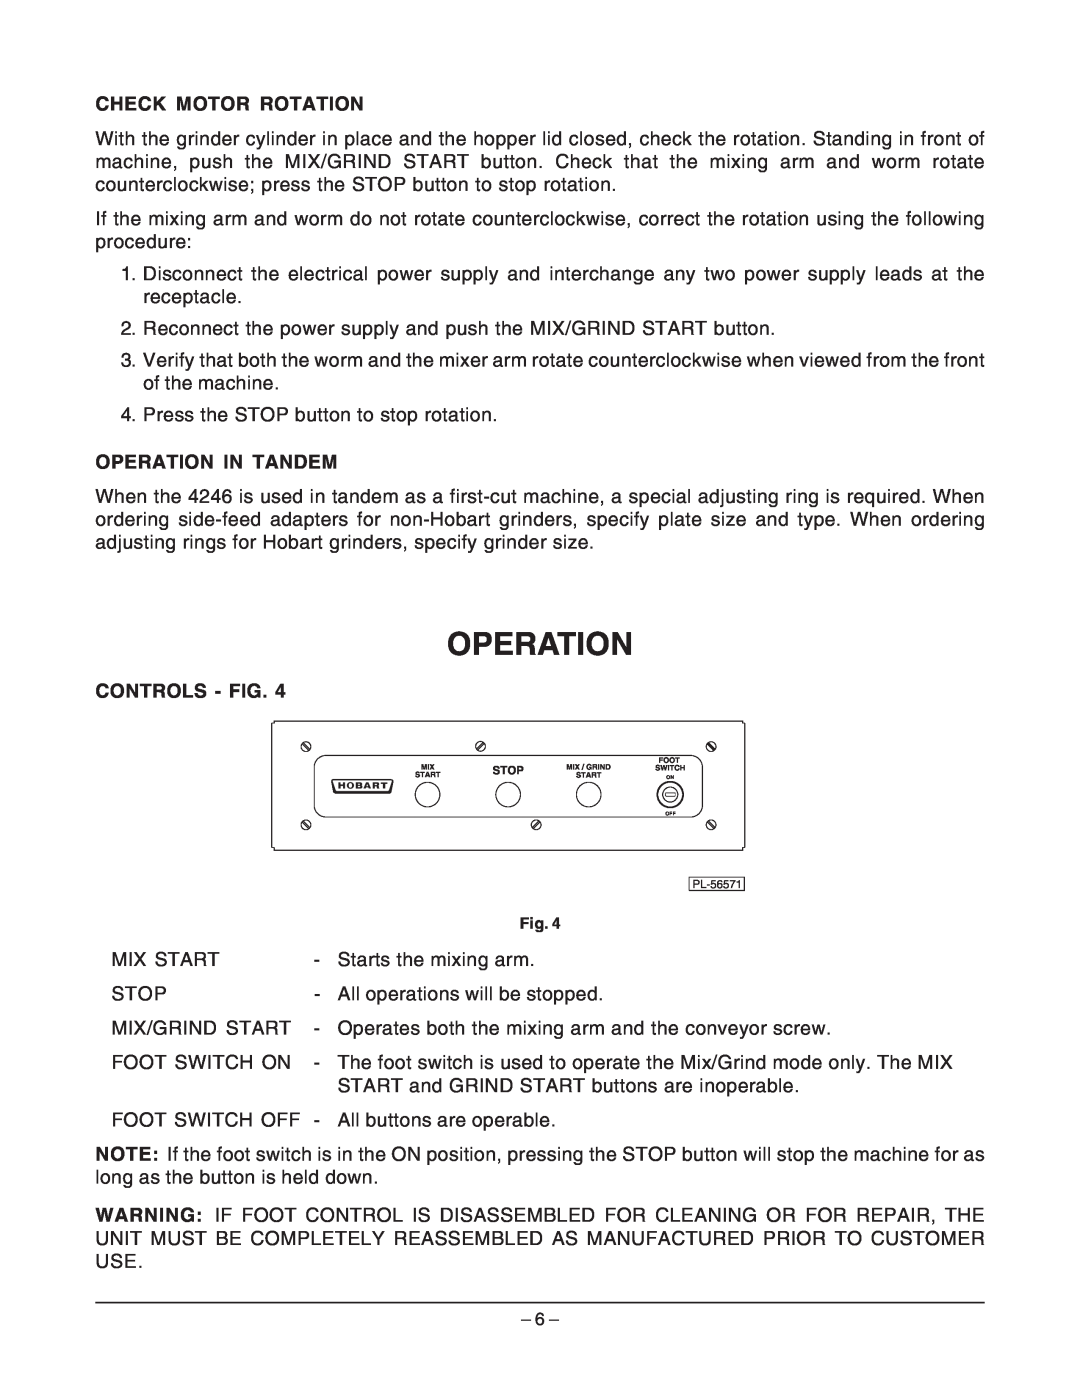 Hobart 4246 manual Check Motor Rotation, Operation In Tandem, Controls - Fig 